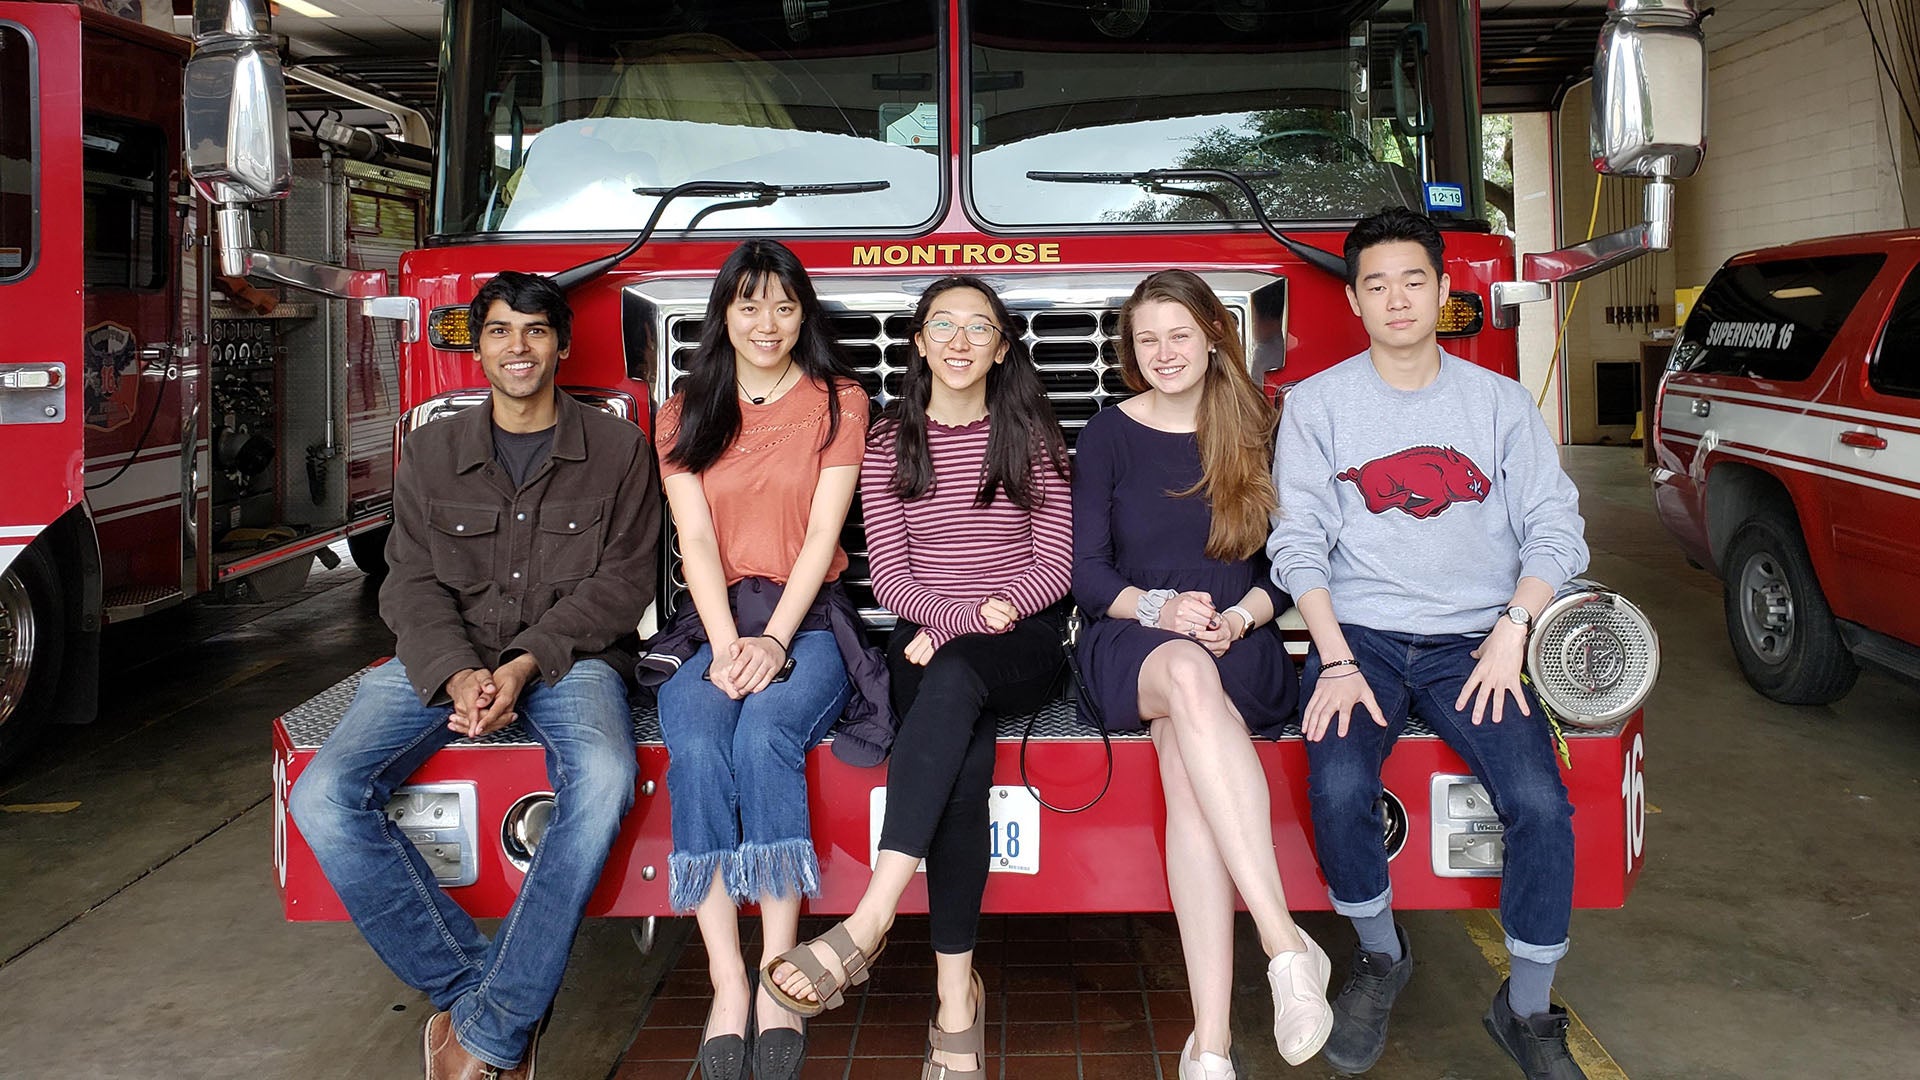 A team of just-graduated Rice University alumni – from left, Ashwin Varma, Shannon Chen, Lynn Zhu, Erin Kreus and Jesse Pan